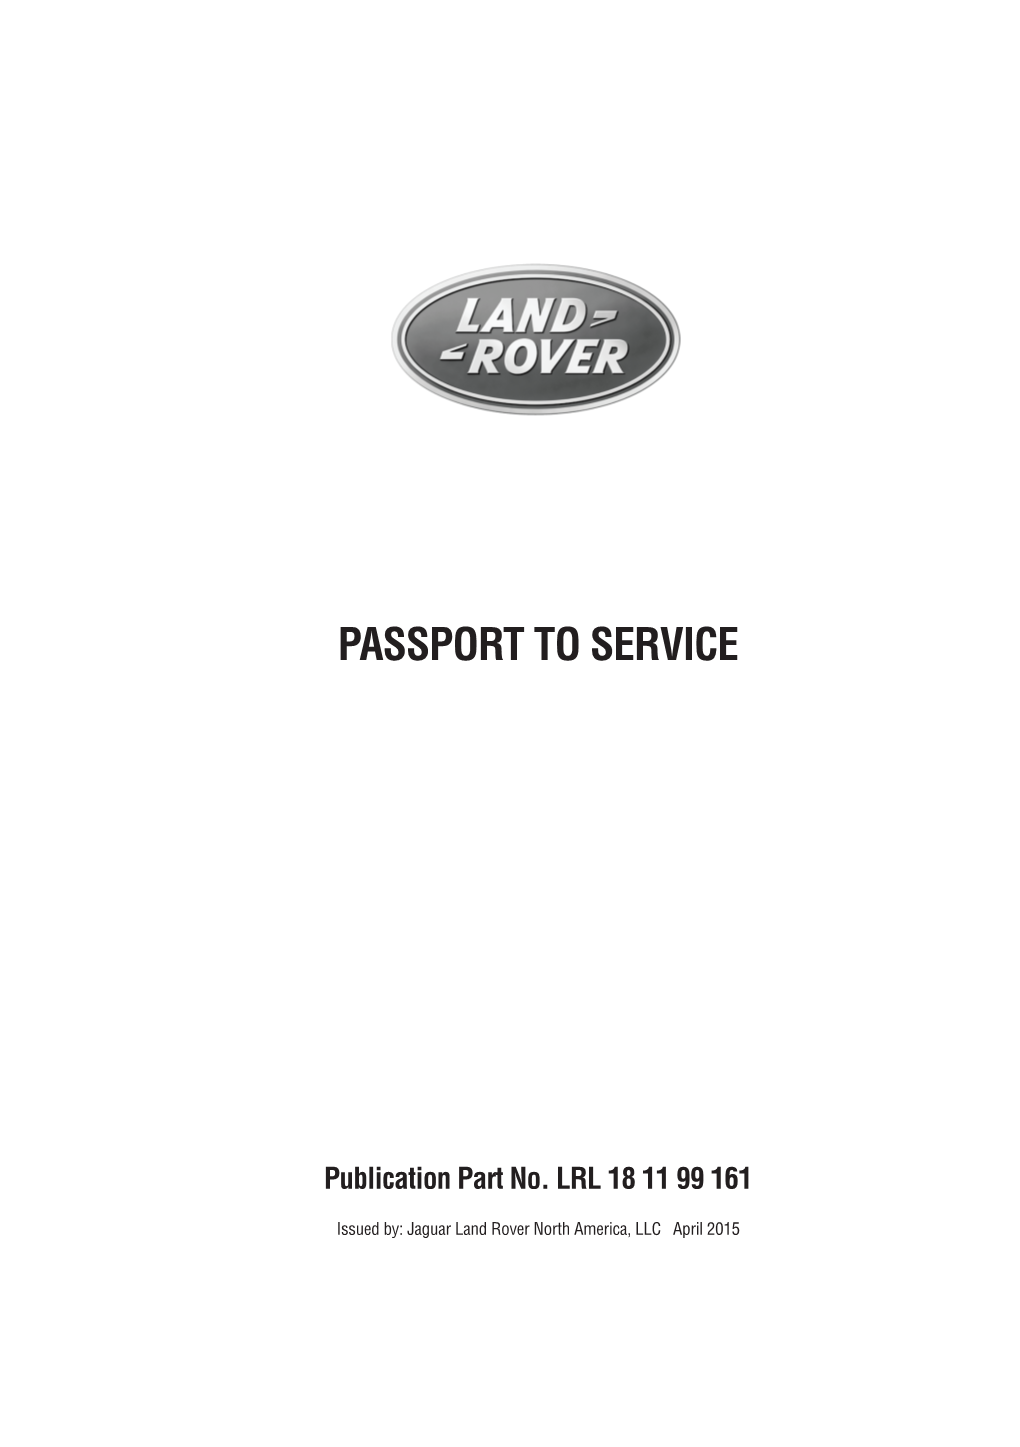 Passport to Service